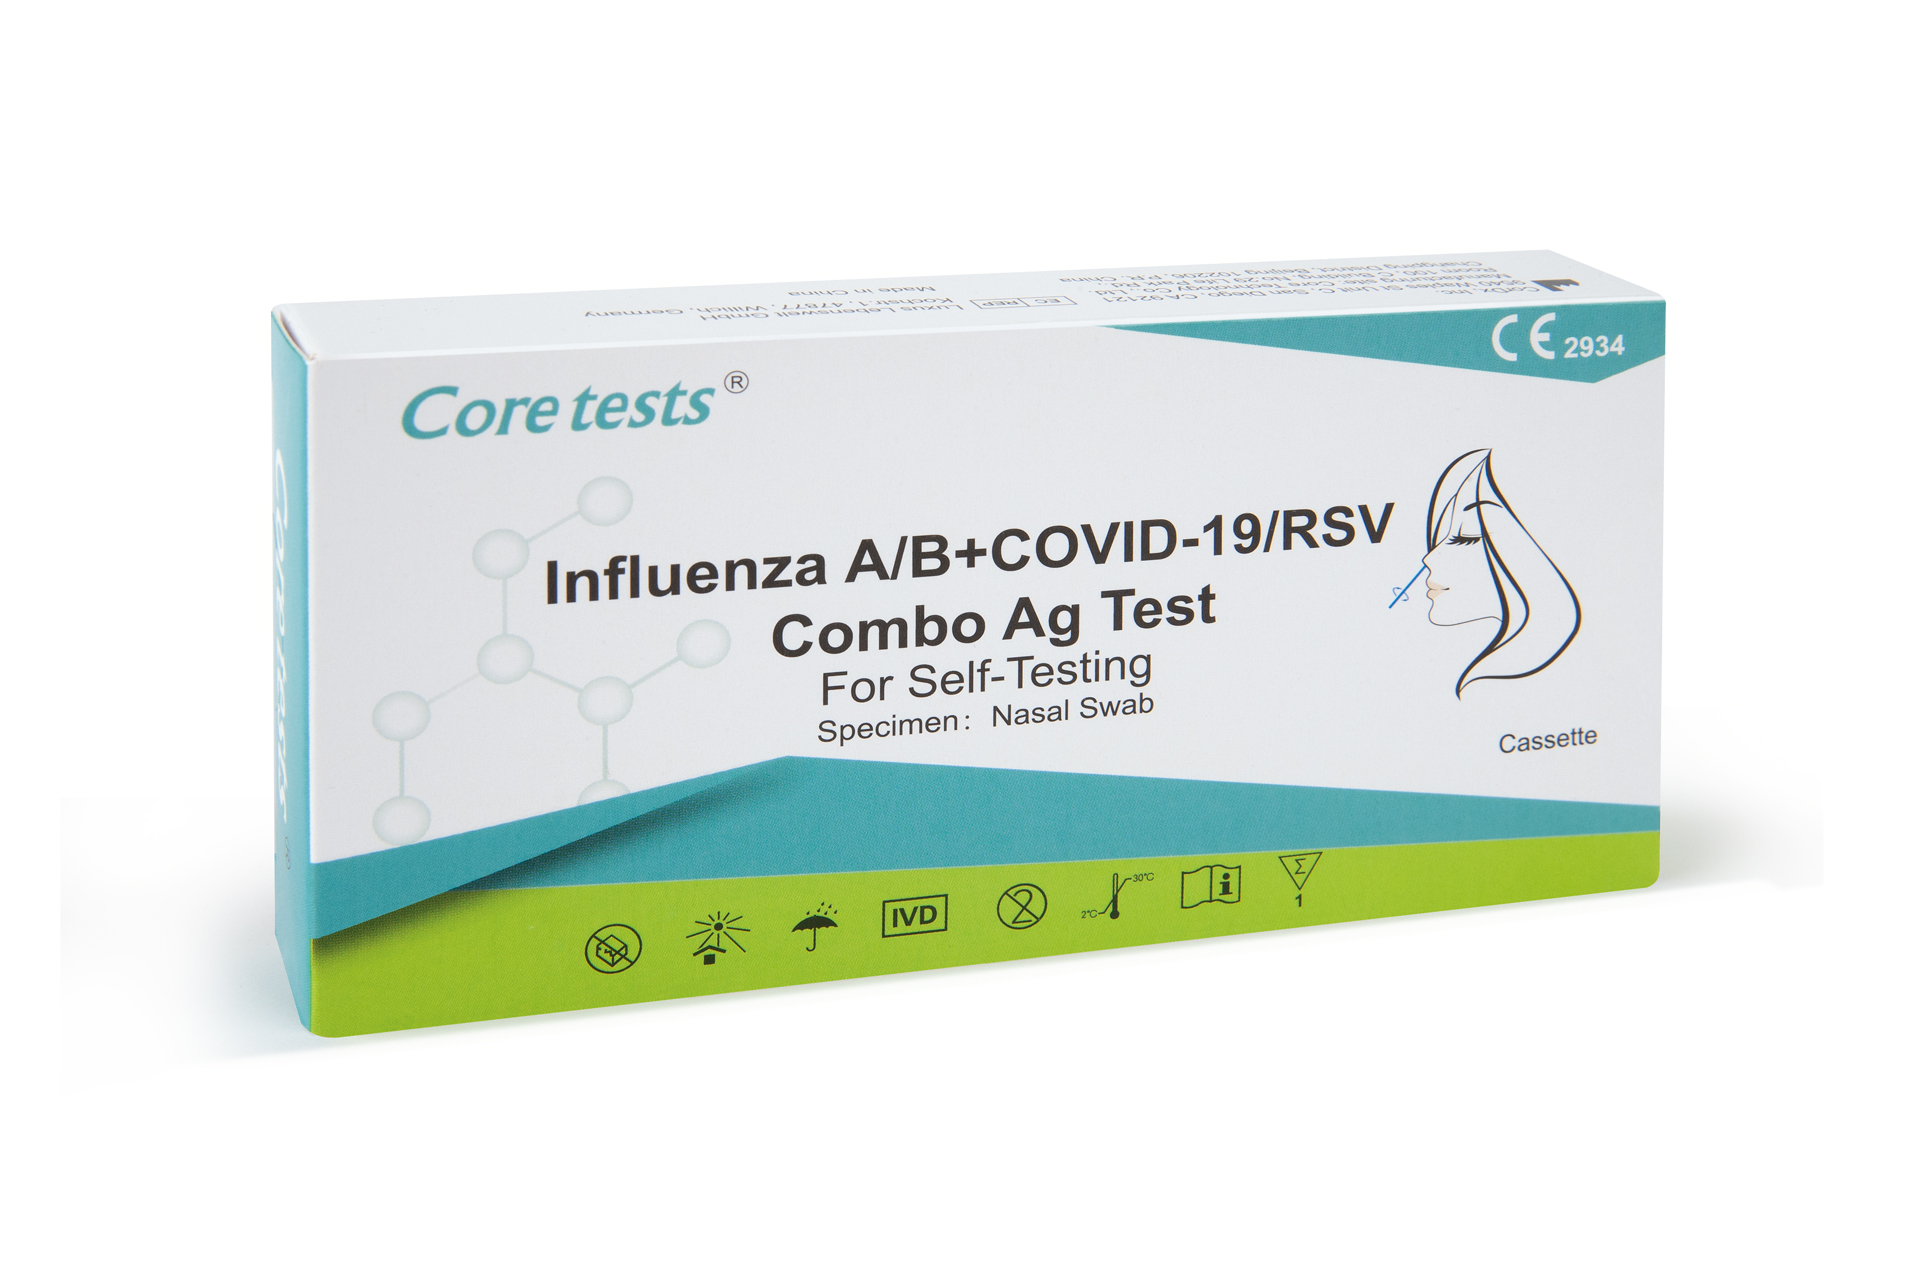 Coretests Covid-19/RSV & Influenza A+B Kombinationstest (CE2934) (25 Stück)